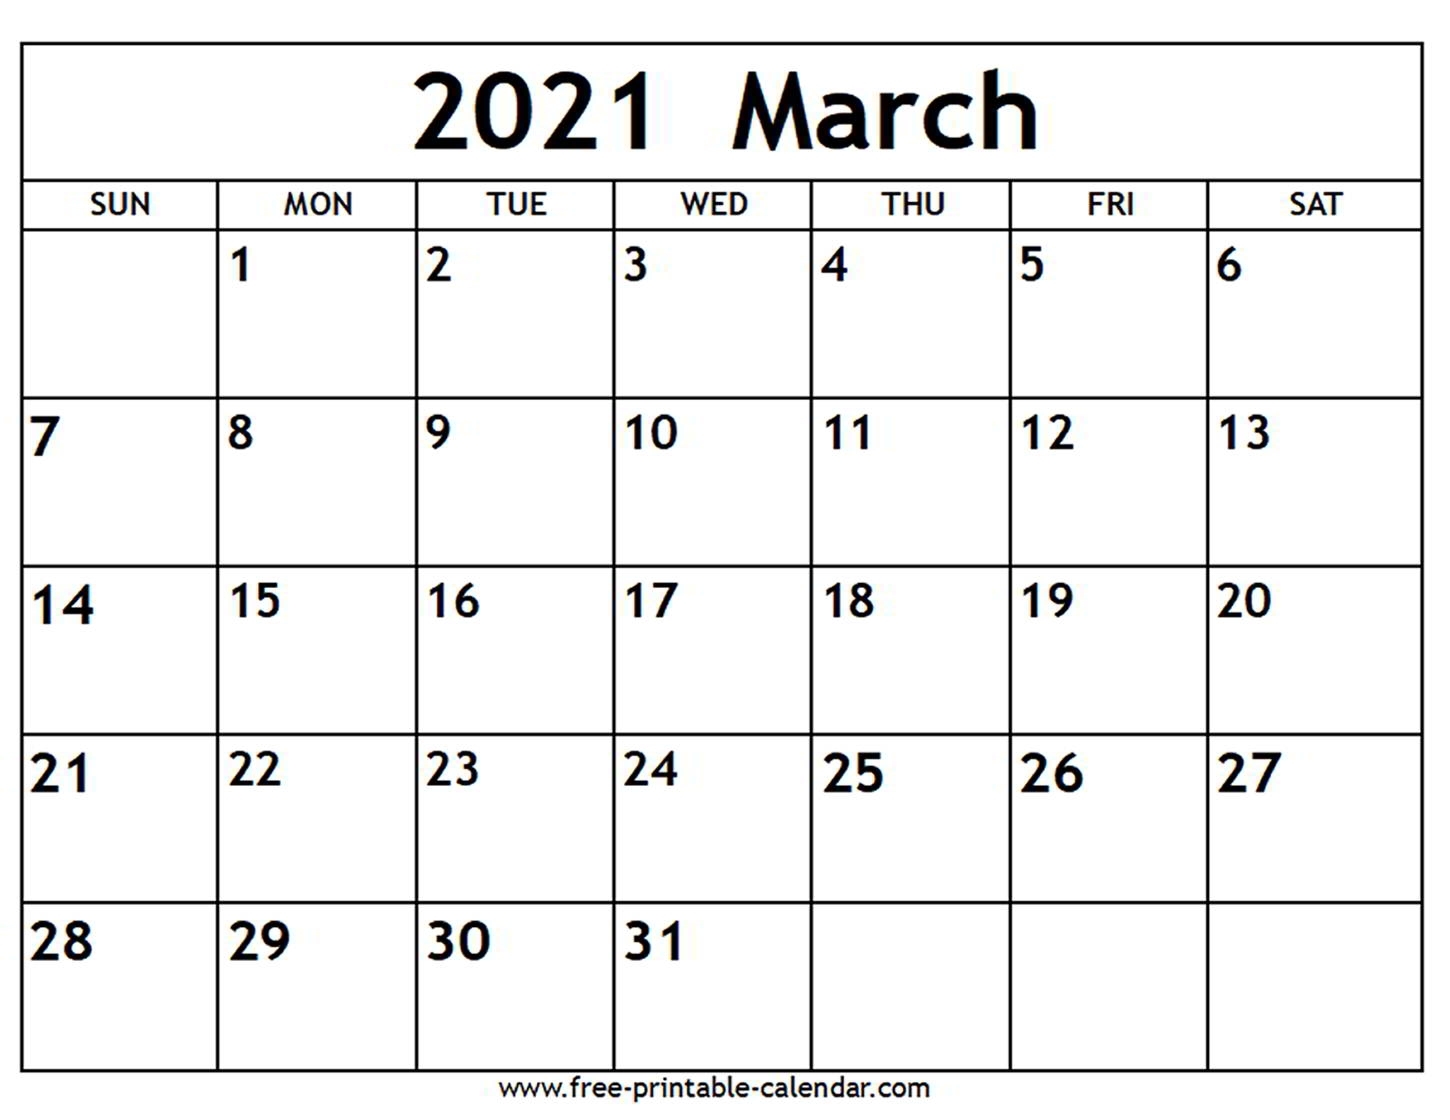 March 2021 Calendar - Free-Printable-Calendar